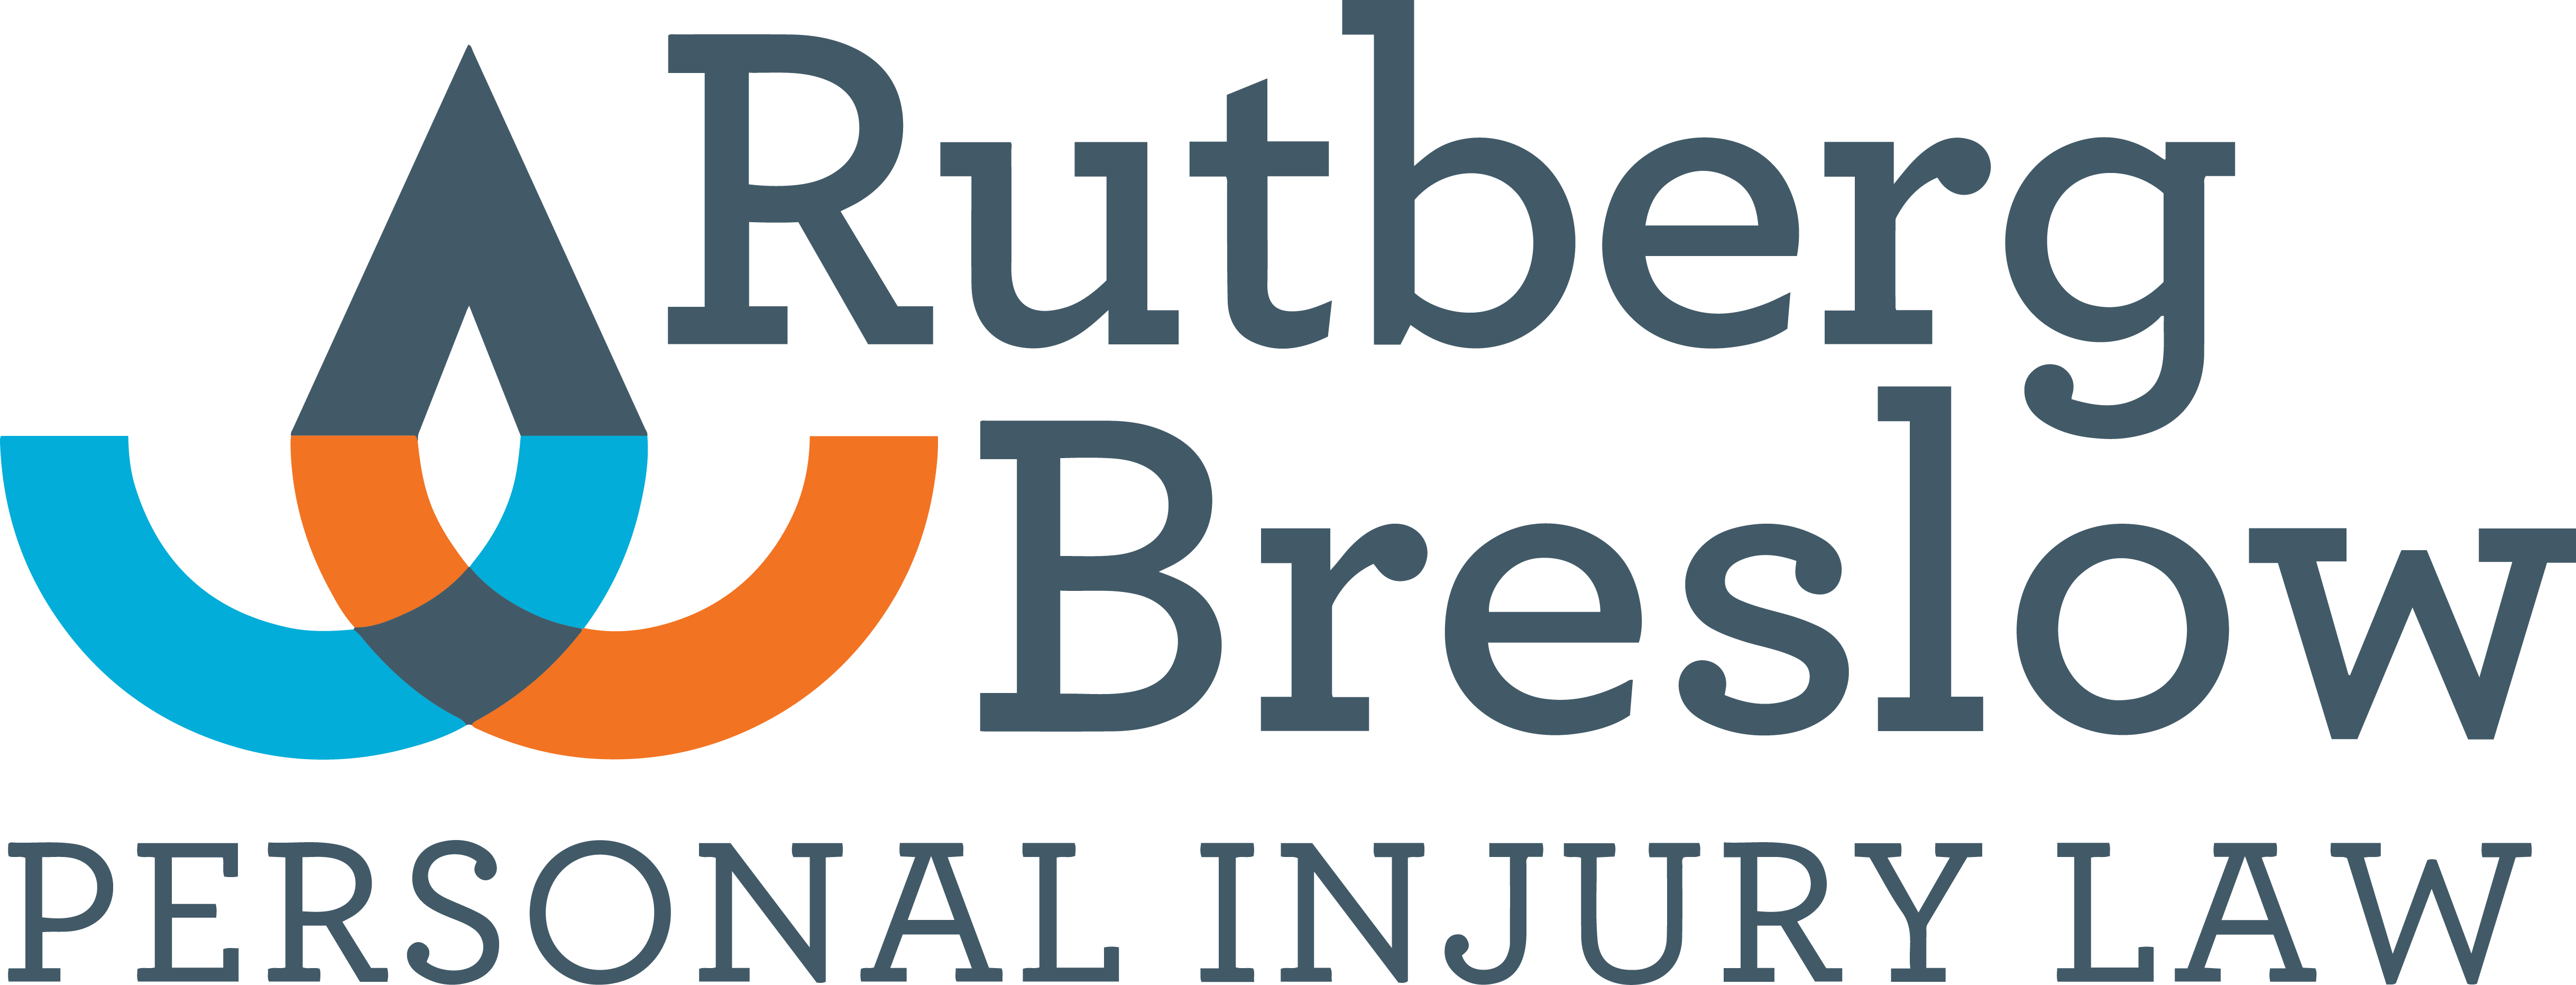 Rutberg Breslow Personal Injury Law Serving New York